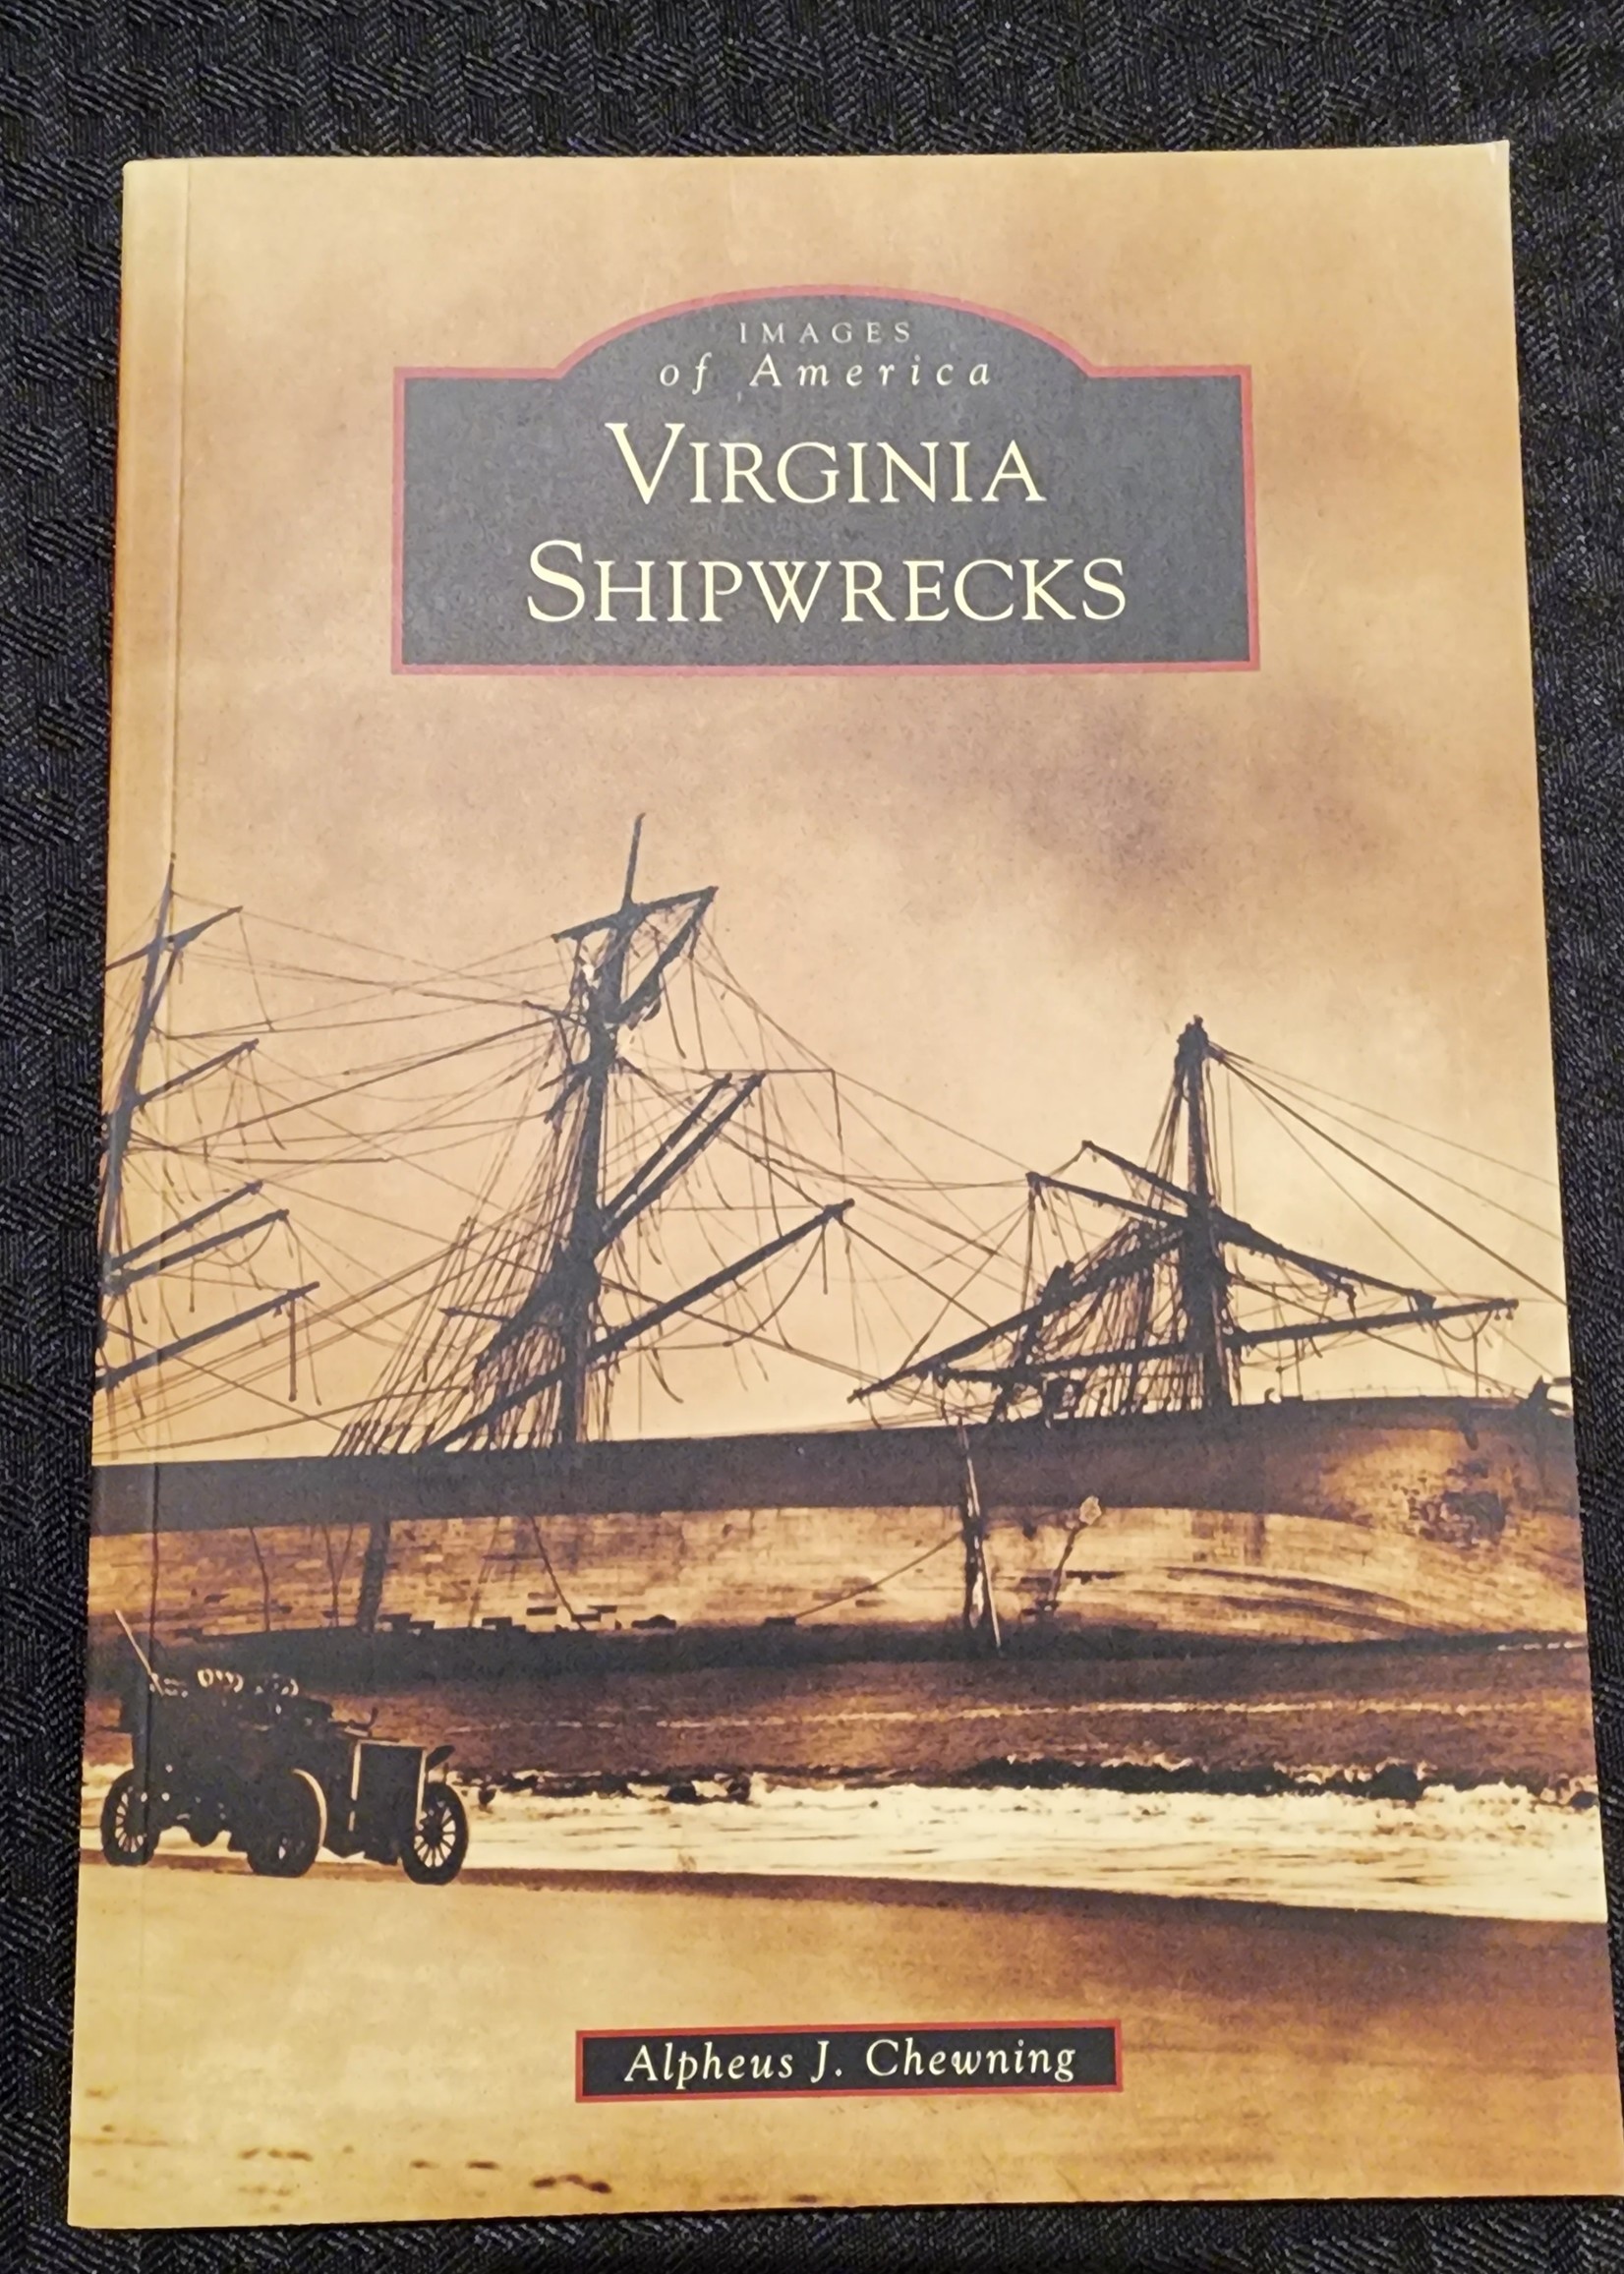 Images of America Images of America: Virginia Shipwrecks